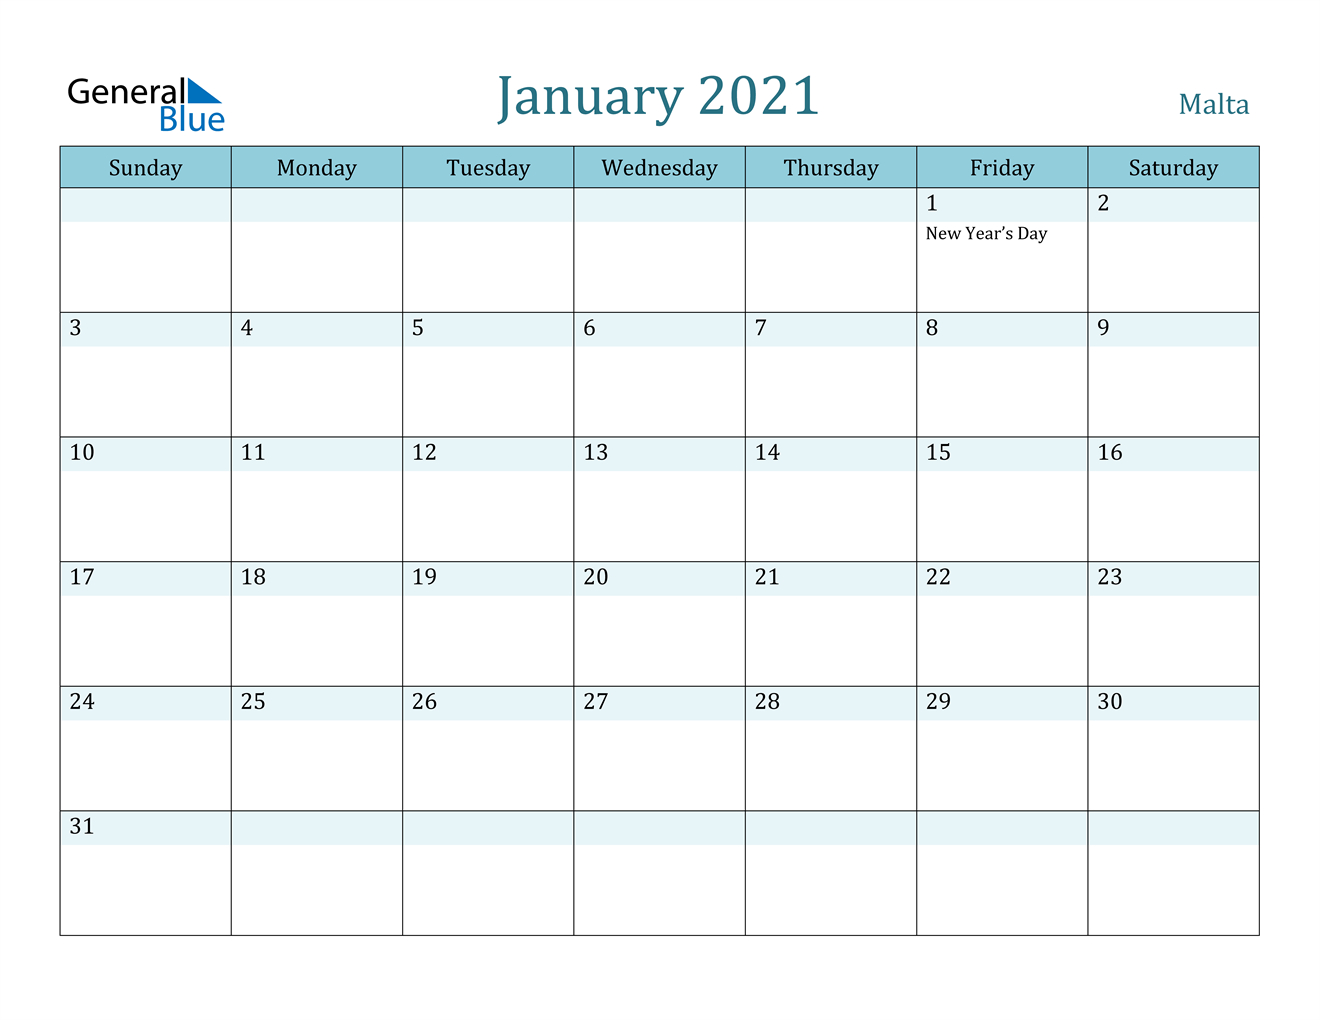 January 2021 Calendar Malta